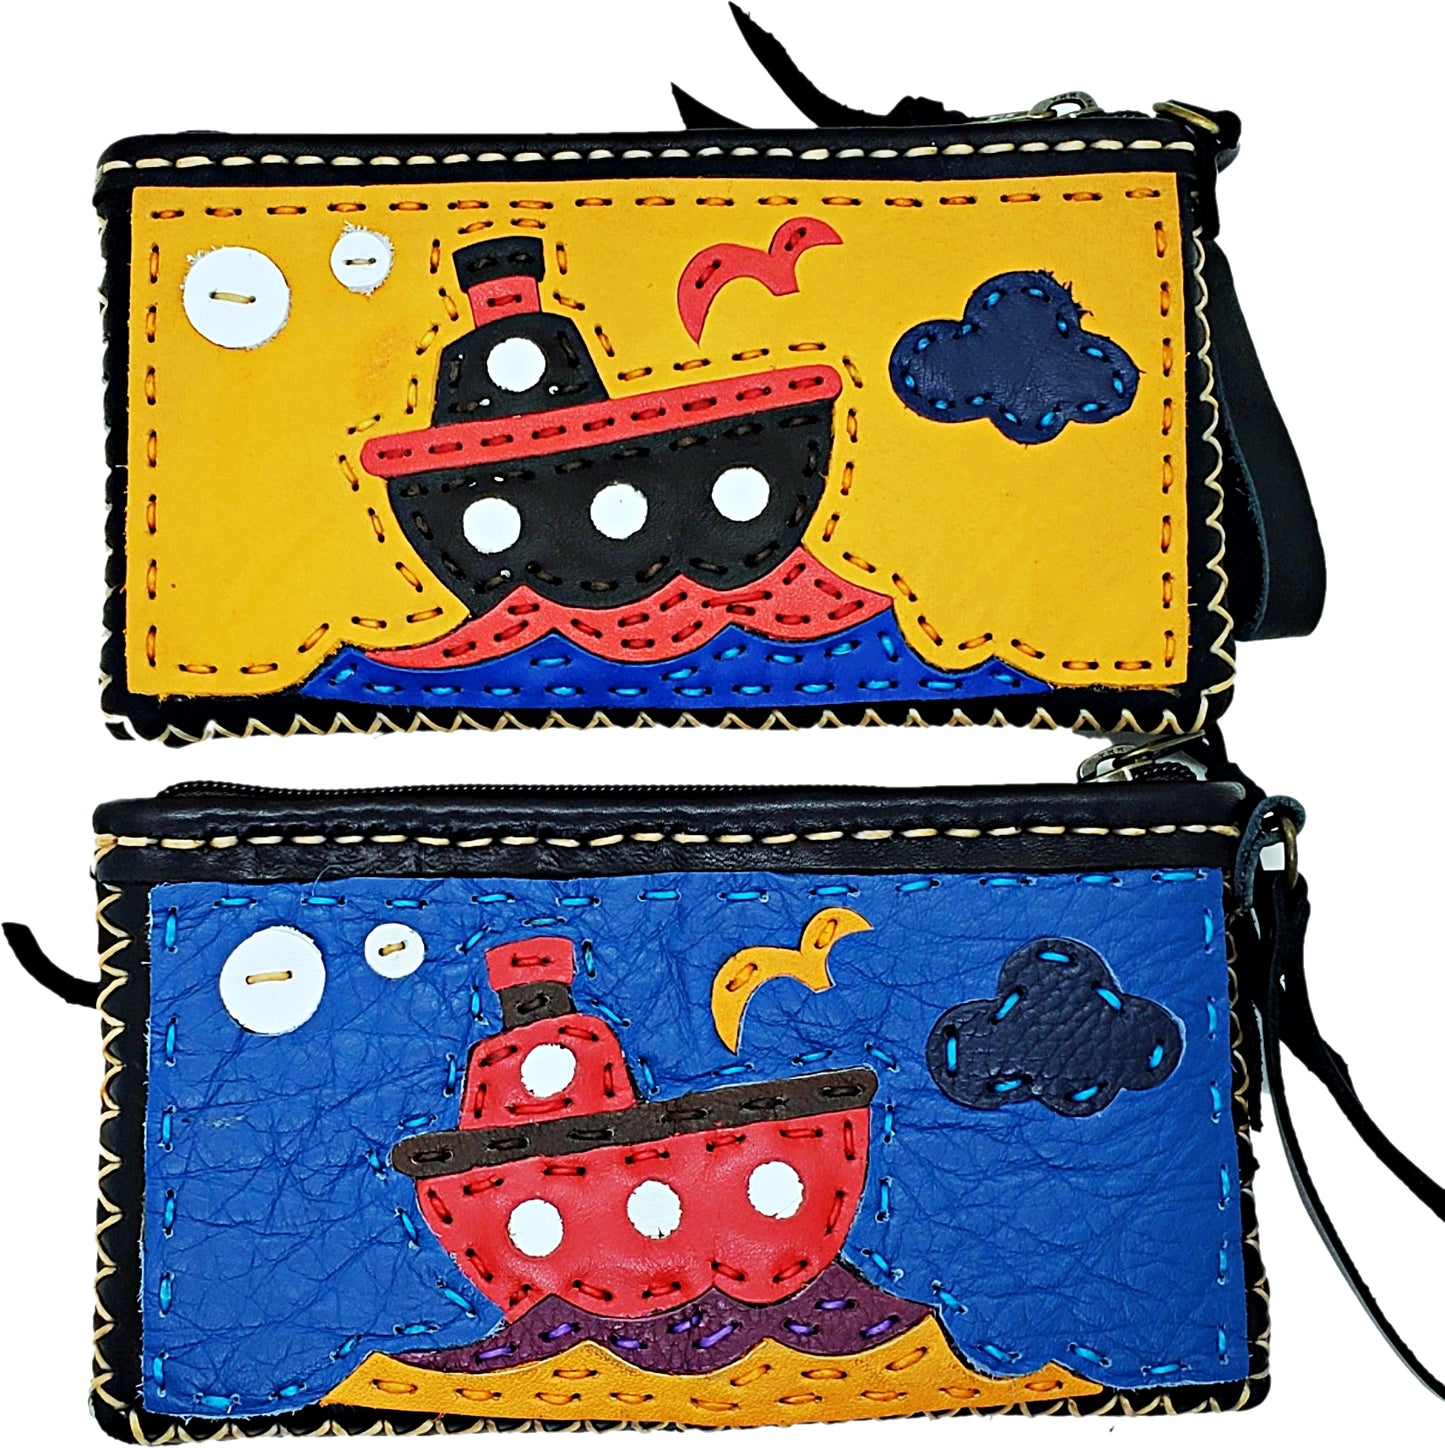 Handmade genuine leather collage art clutch/ wallet-Tug boat design